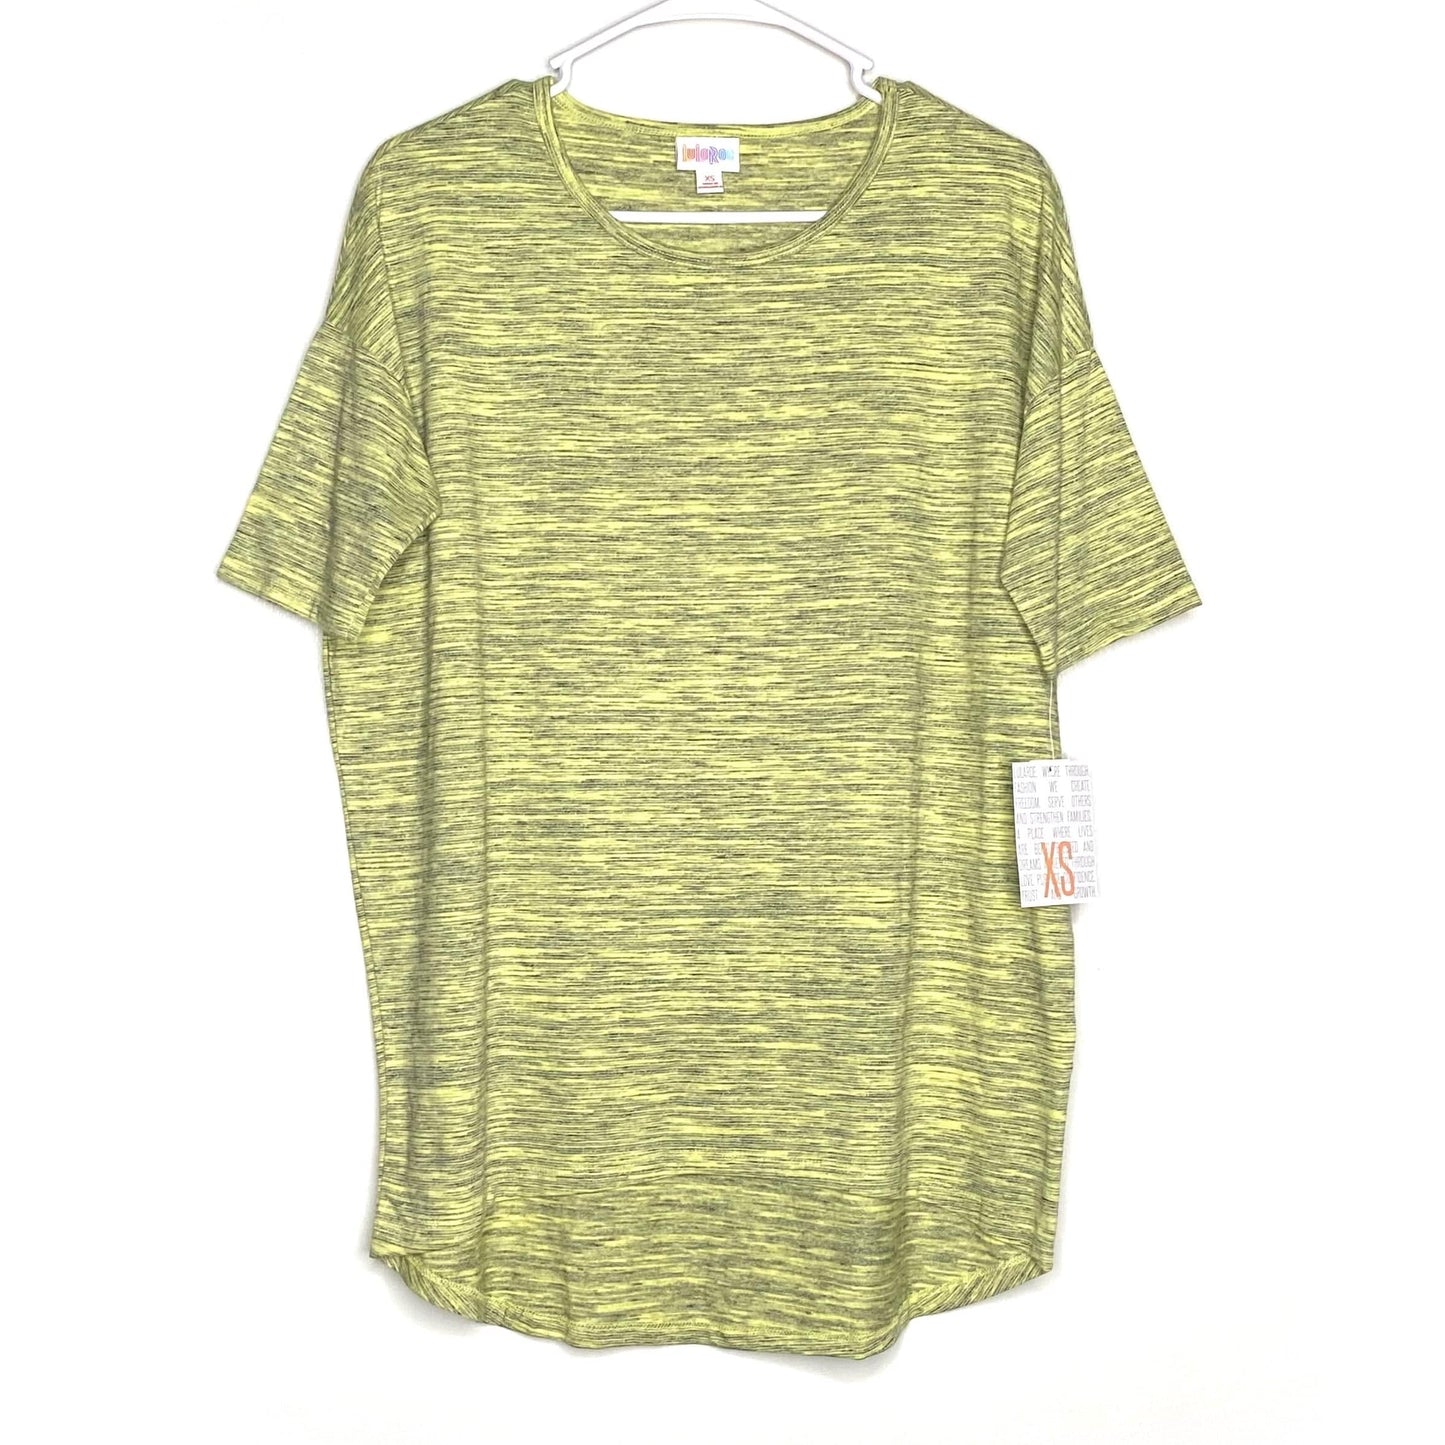 LuLaRoe Womens Size XS Irma Lime Green Brushed T-Shirt S/s NWT